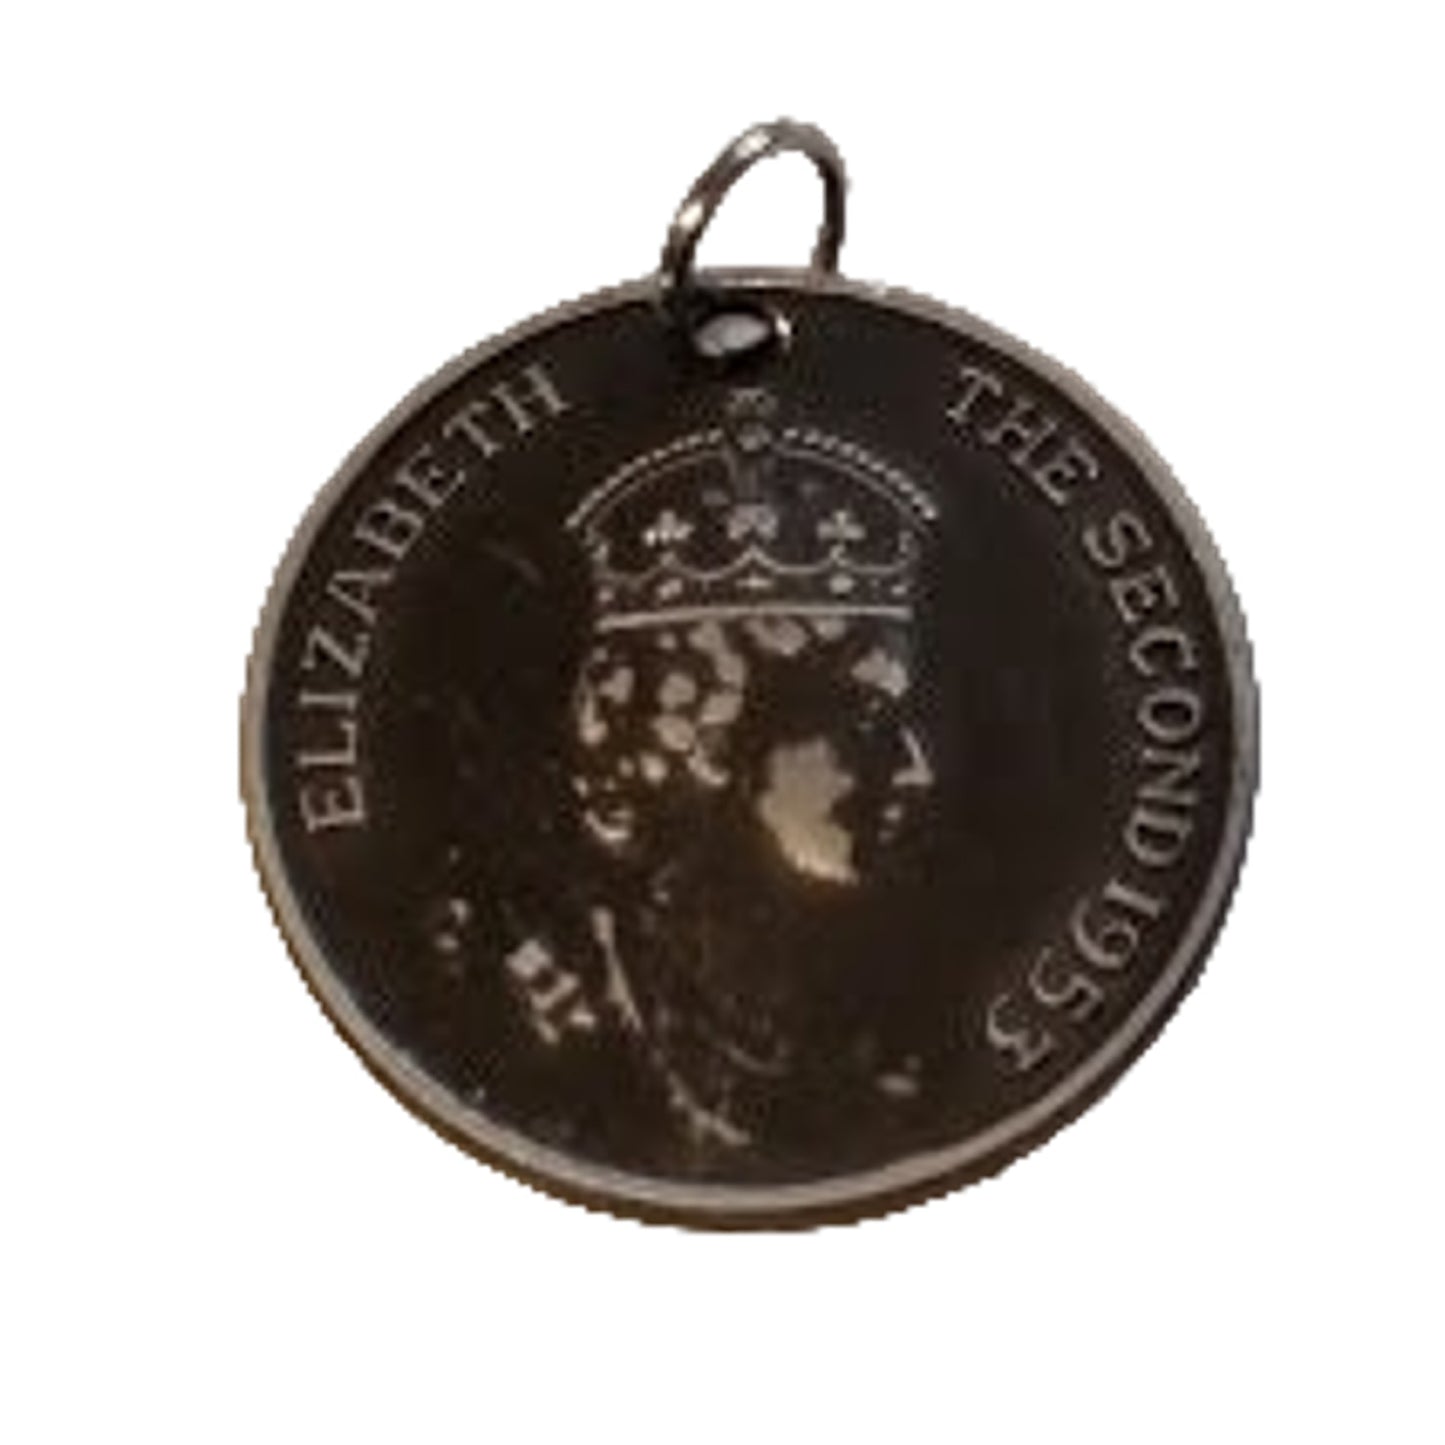 1953 Queen Elizabeth II Coronation Commemorative Coin Pendent Royal Family Memorabilia